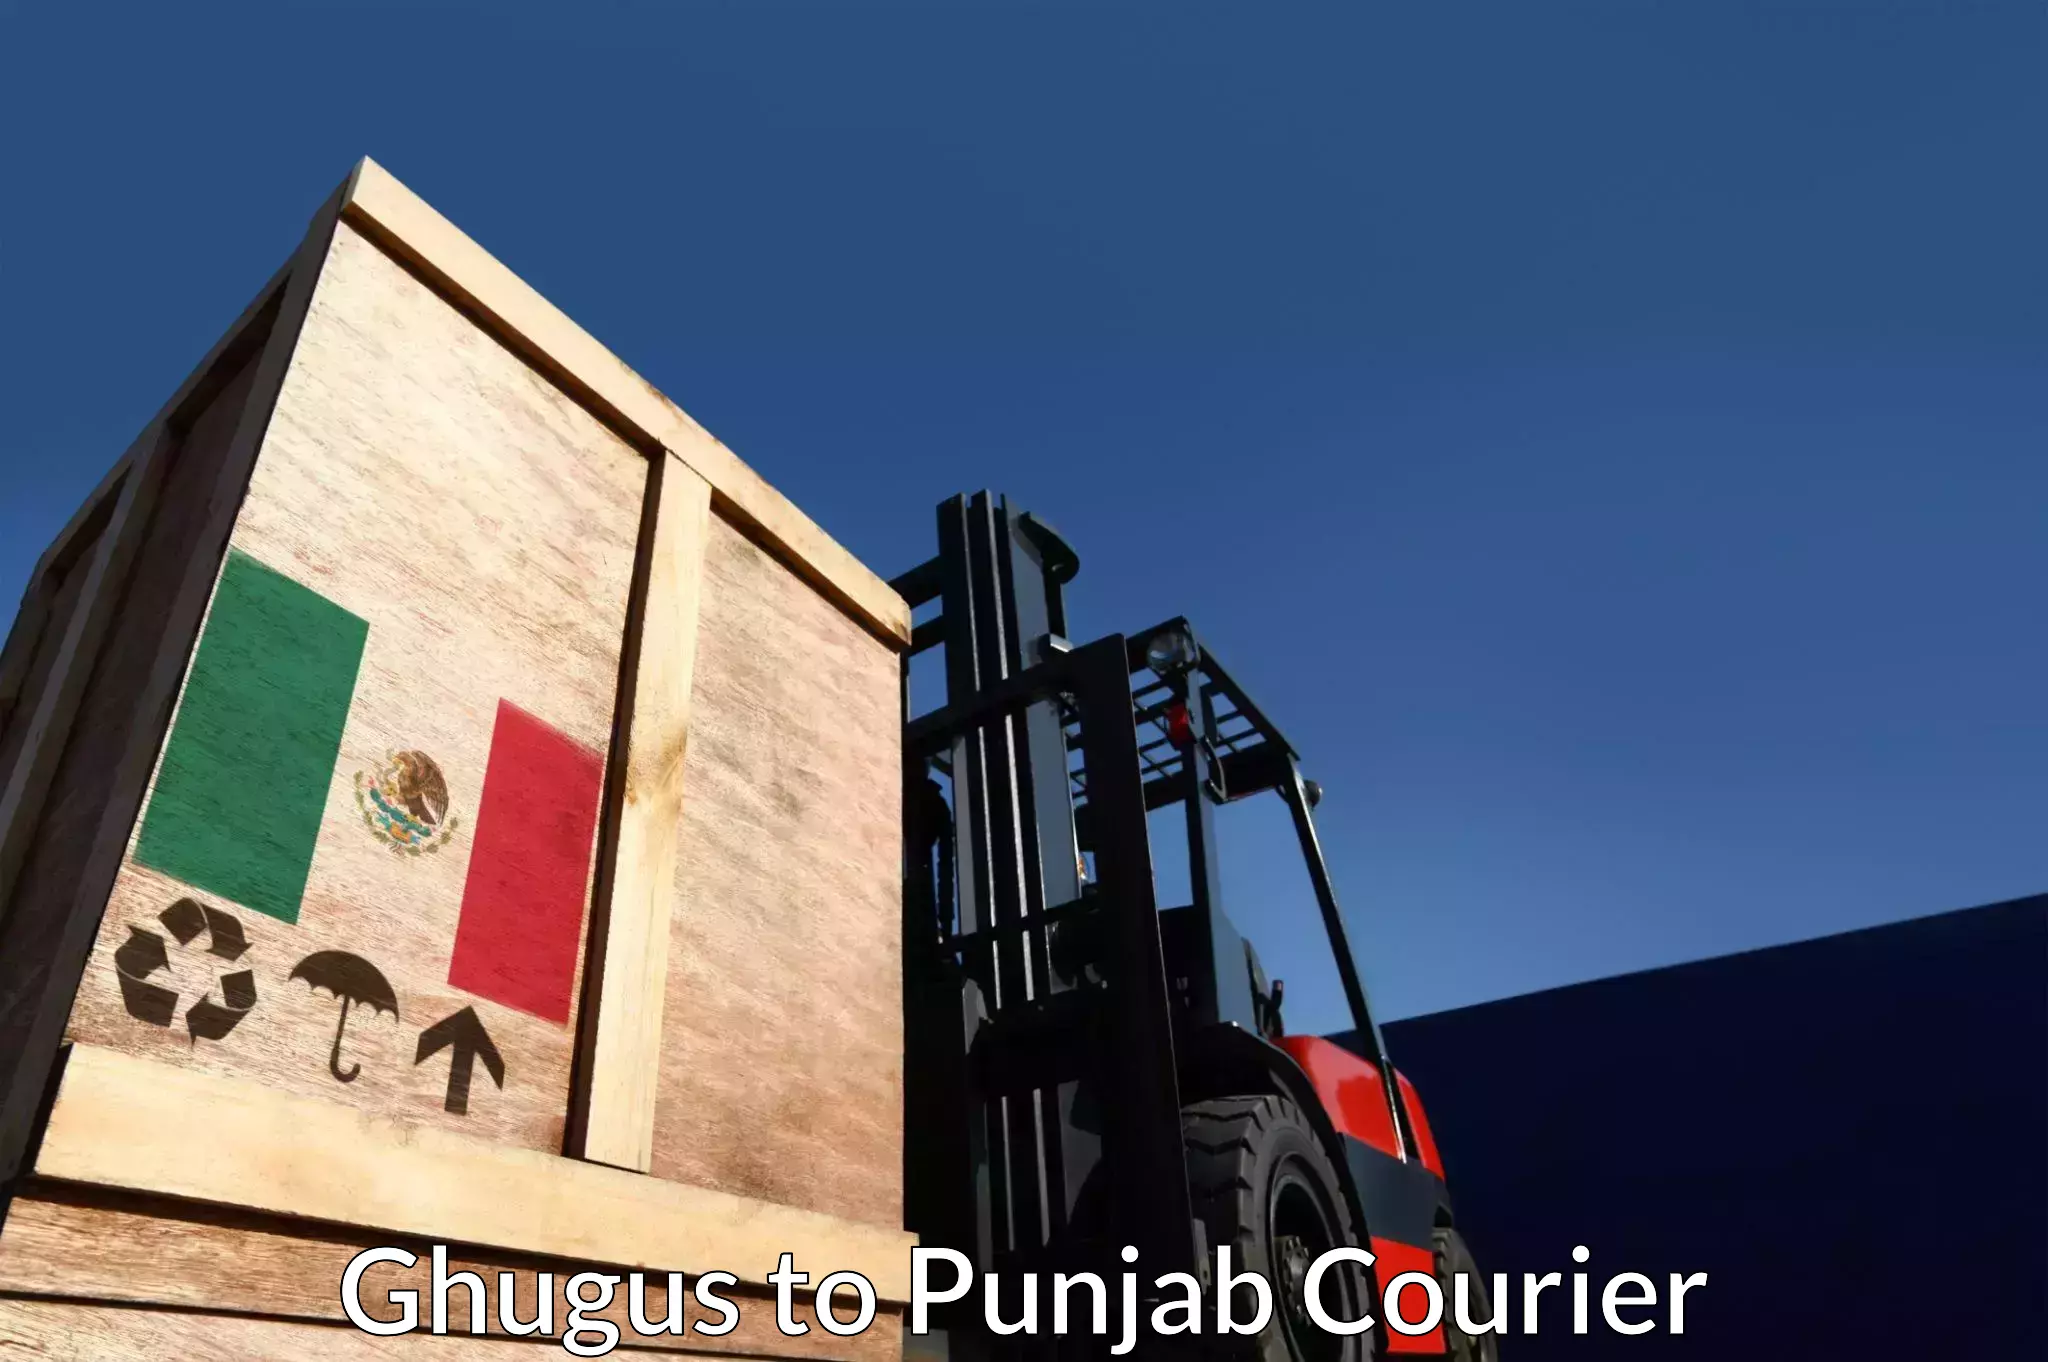 Customer-centric shipping Ghugus to Ajnala